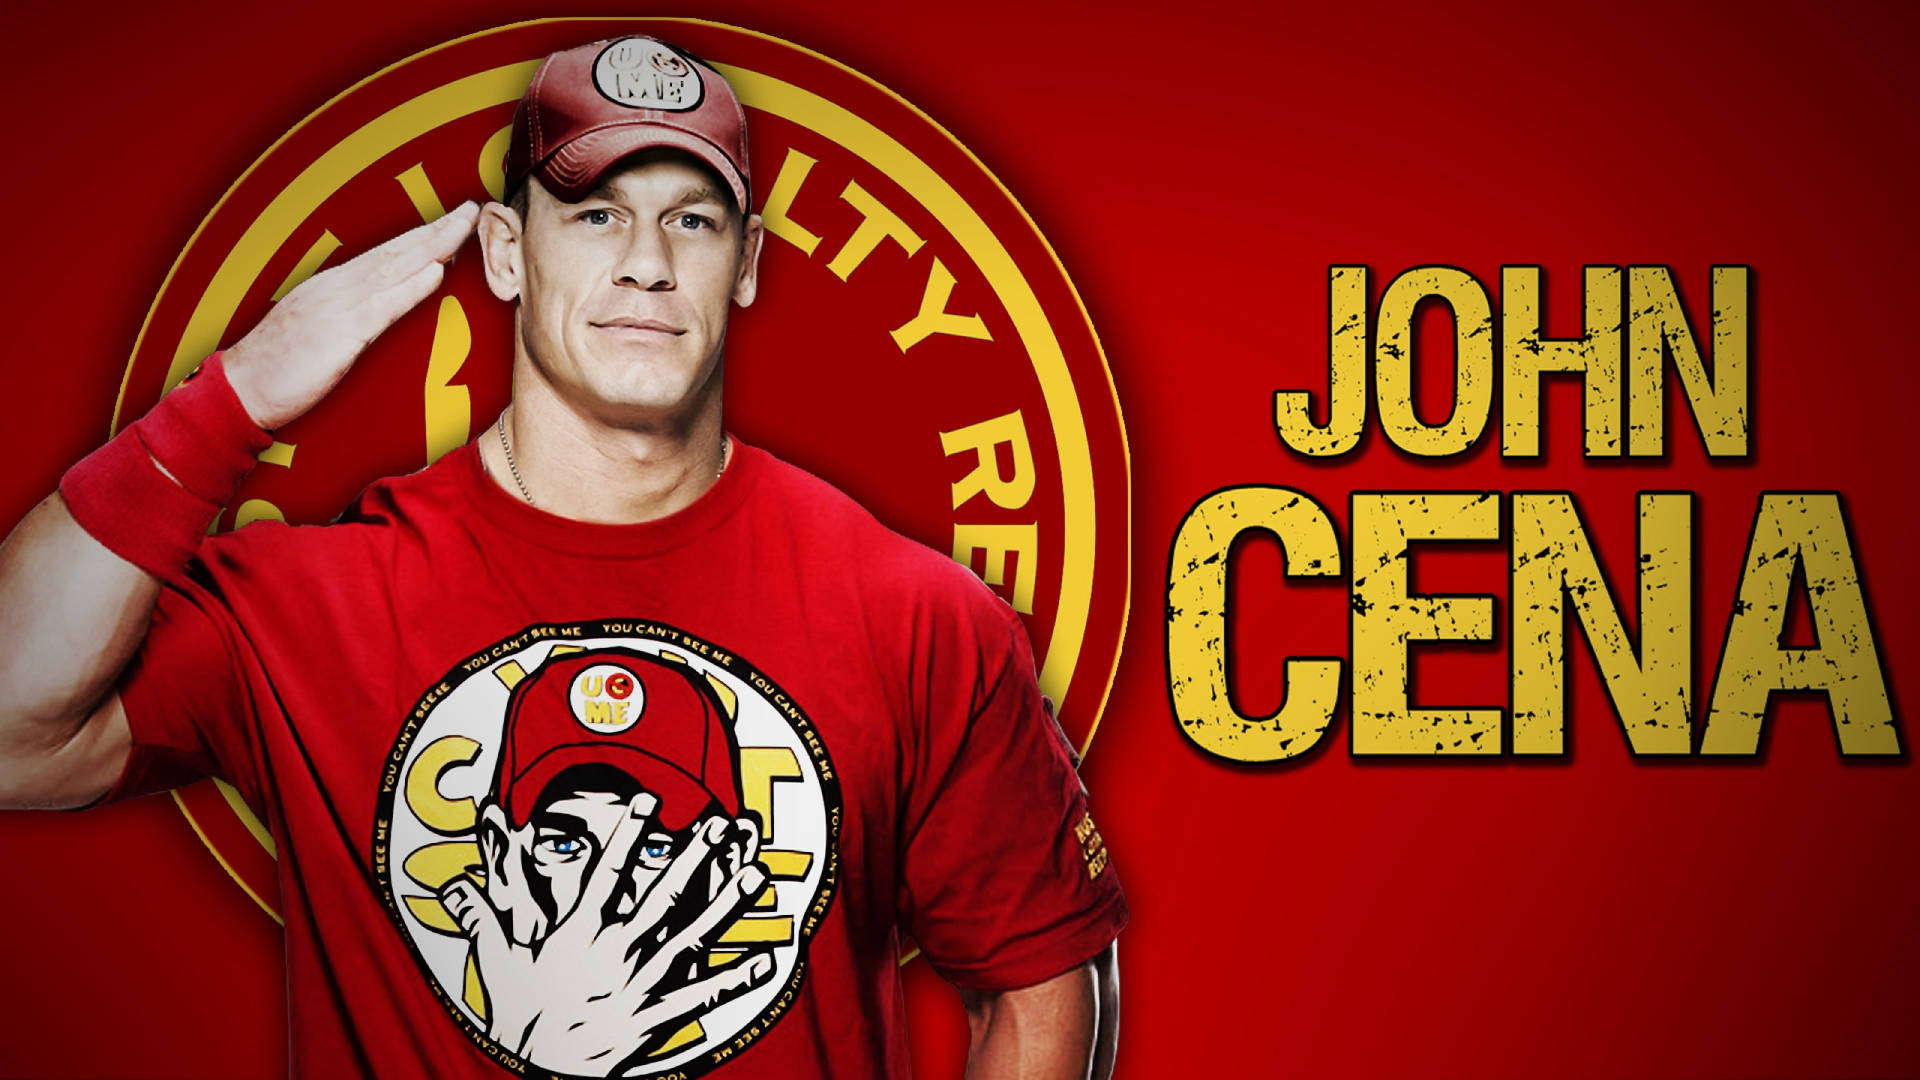 John Cena 2560X1440 Wallpaper and Background Image